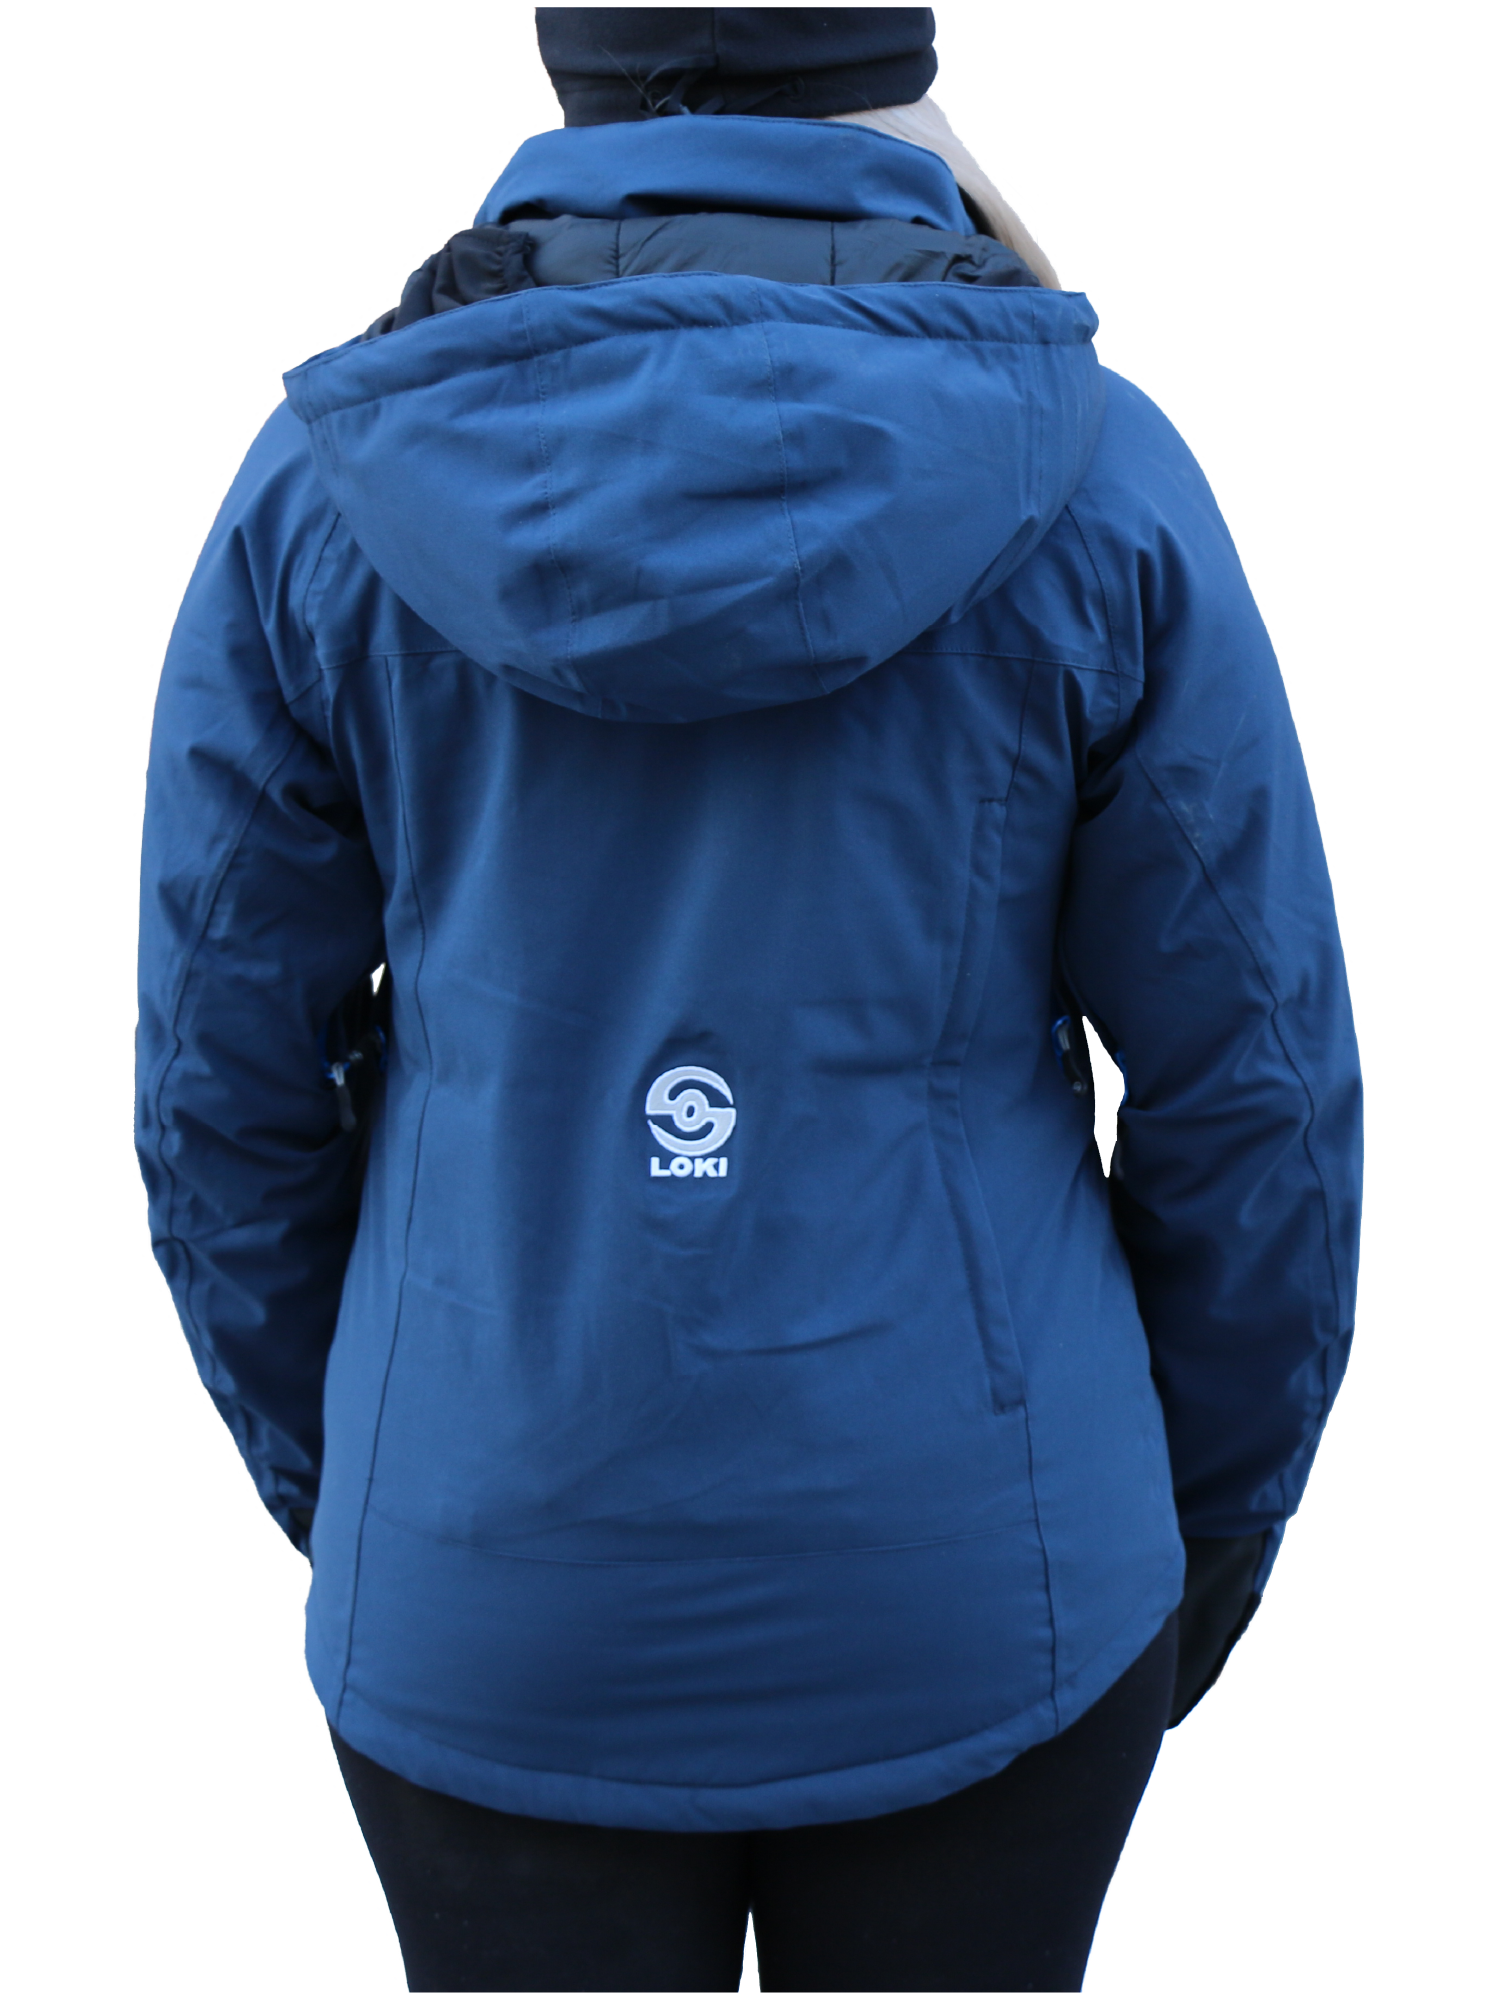 Woman's Meta Snow Sport Jacket - Navy Blue (Back)